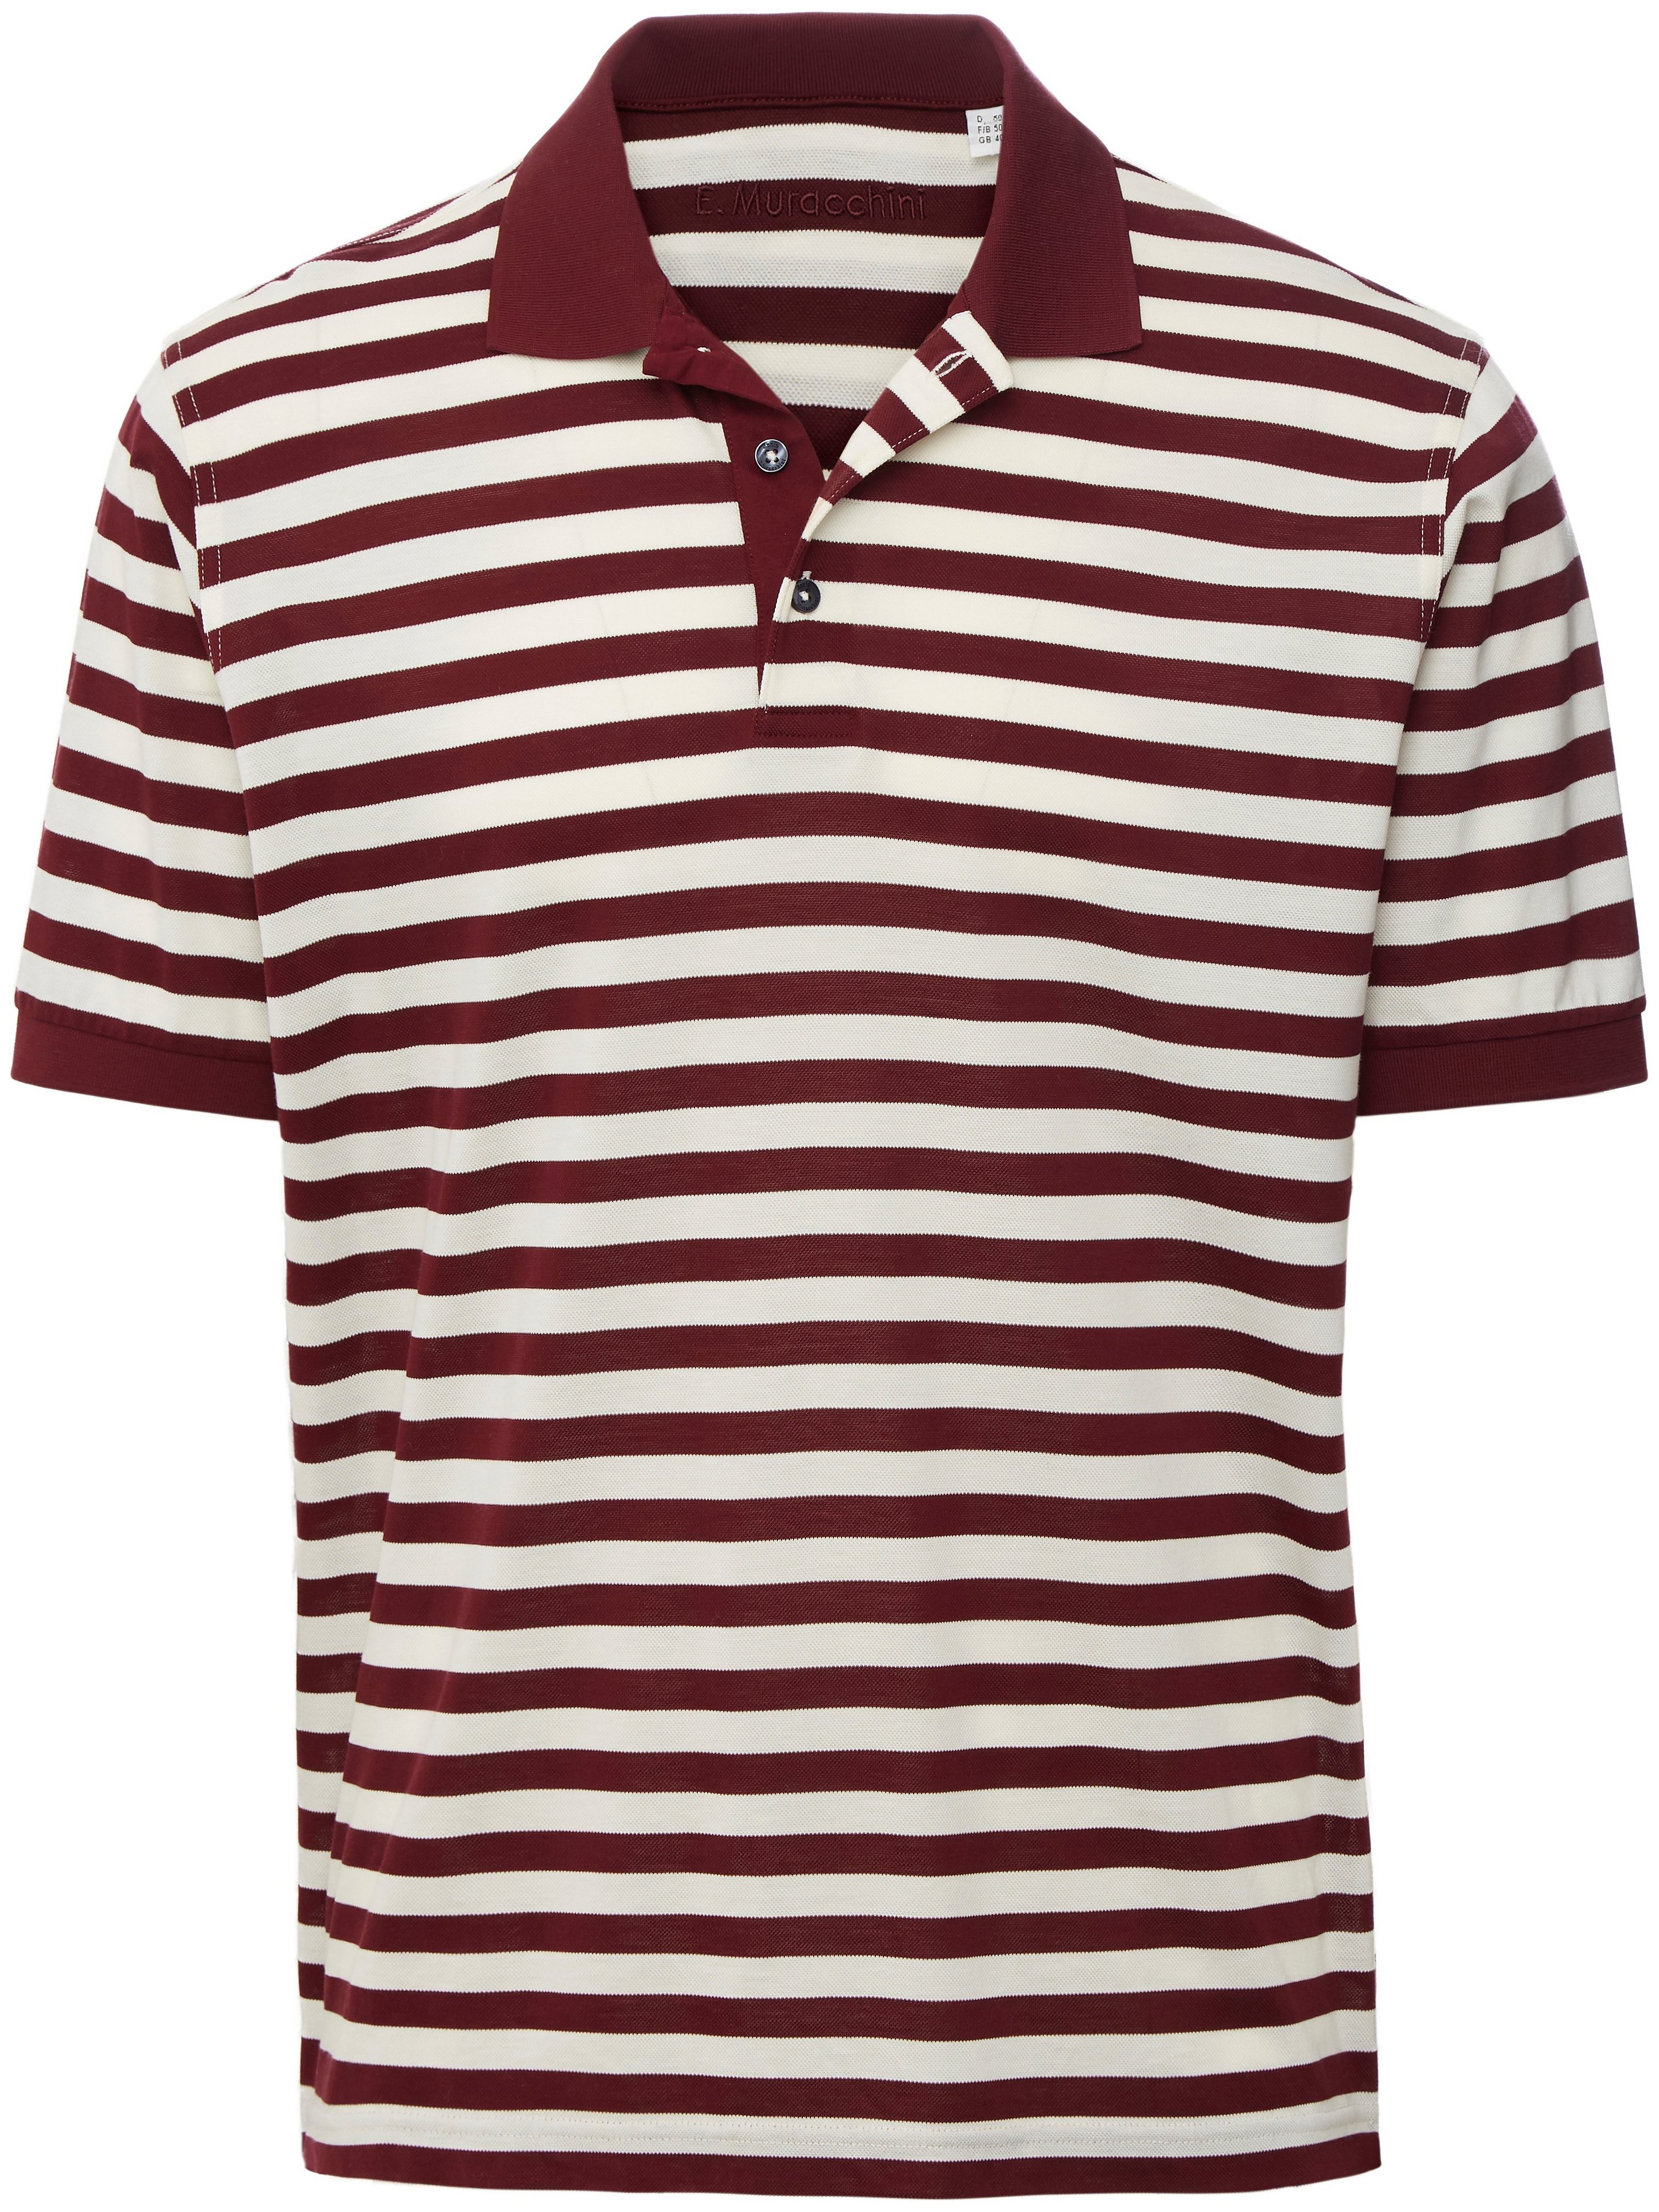 Polo shirt short sleeves E.Muracchini red